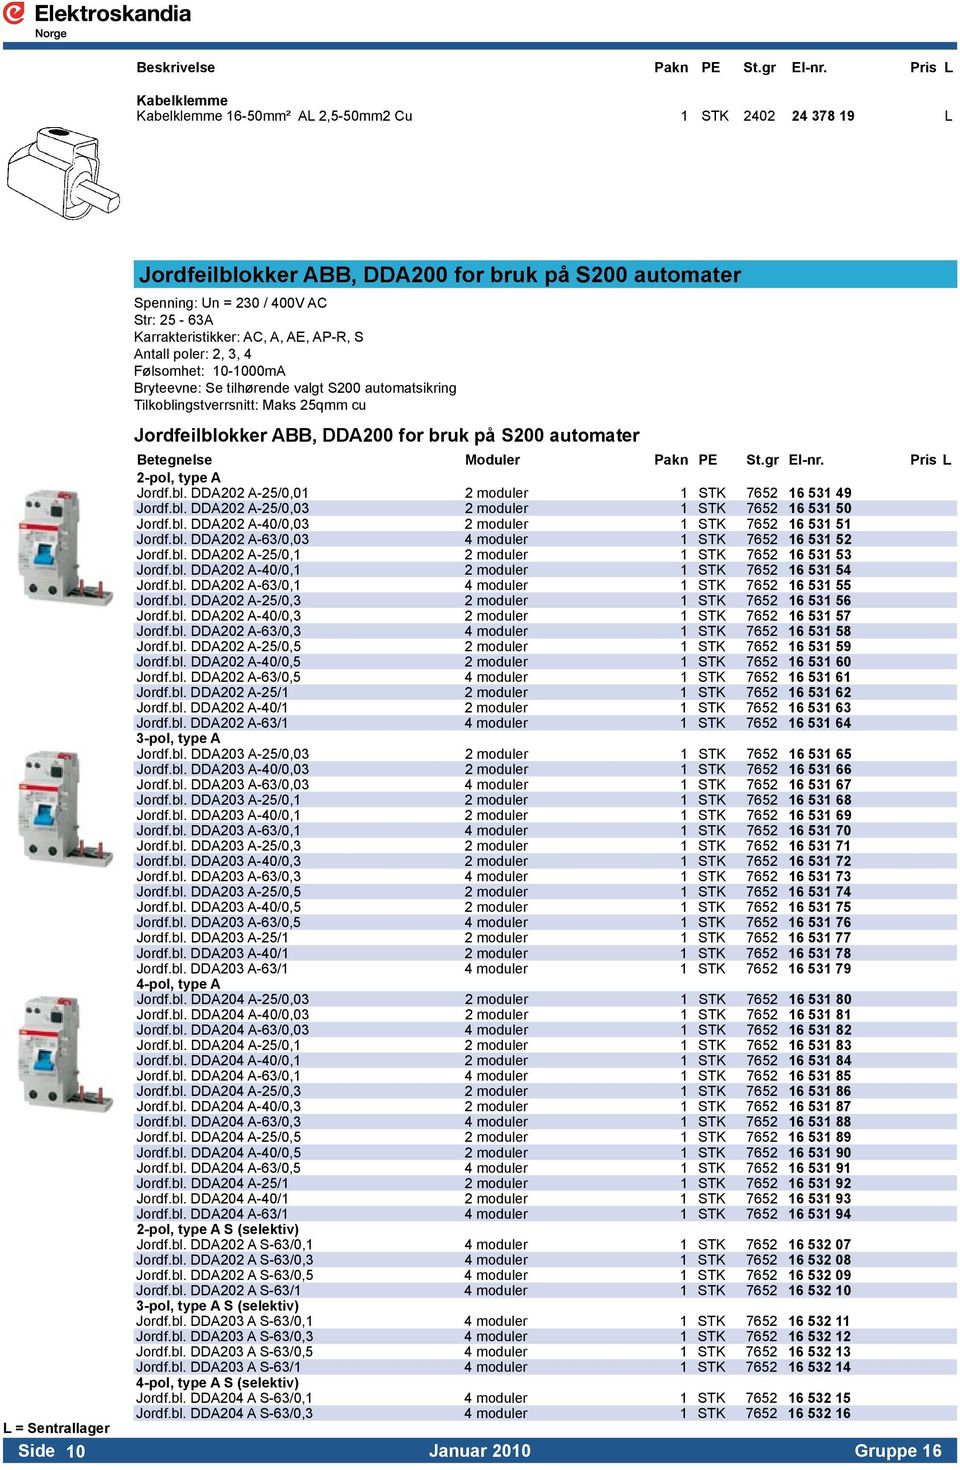 automater Betegnelse Moduler Pakn PE St.gr El-nr. Pris L 2-pol, type A Jordf.bl. DDA202 A-25/0,01 2 moduler 1 STK 7652 16 531 49 Jordf.bl. DDA202 A-25/0,03 2 moduler 1 STK 7652 16 531 50 Jordf.bl. DDA202 A-40/0,03 2 moduler 1 STK 7652 16 531 51 Jordf.